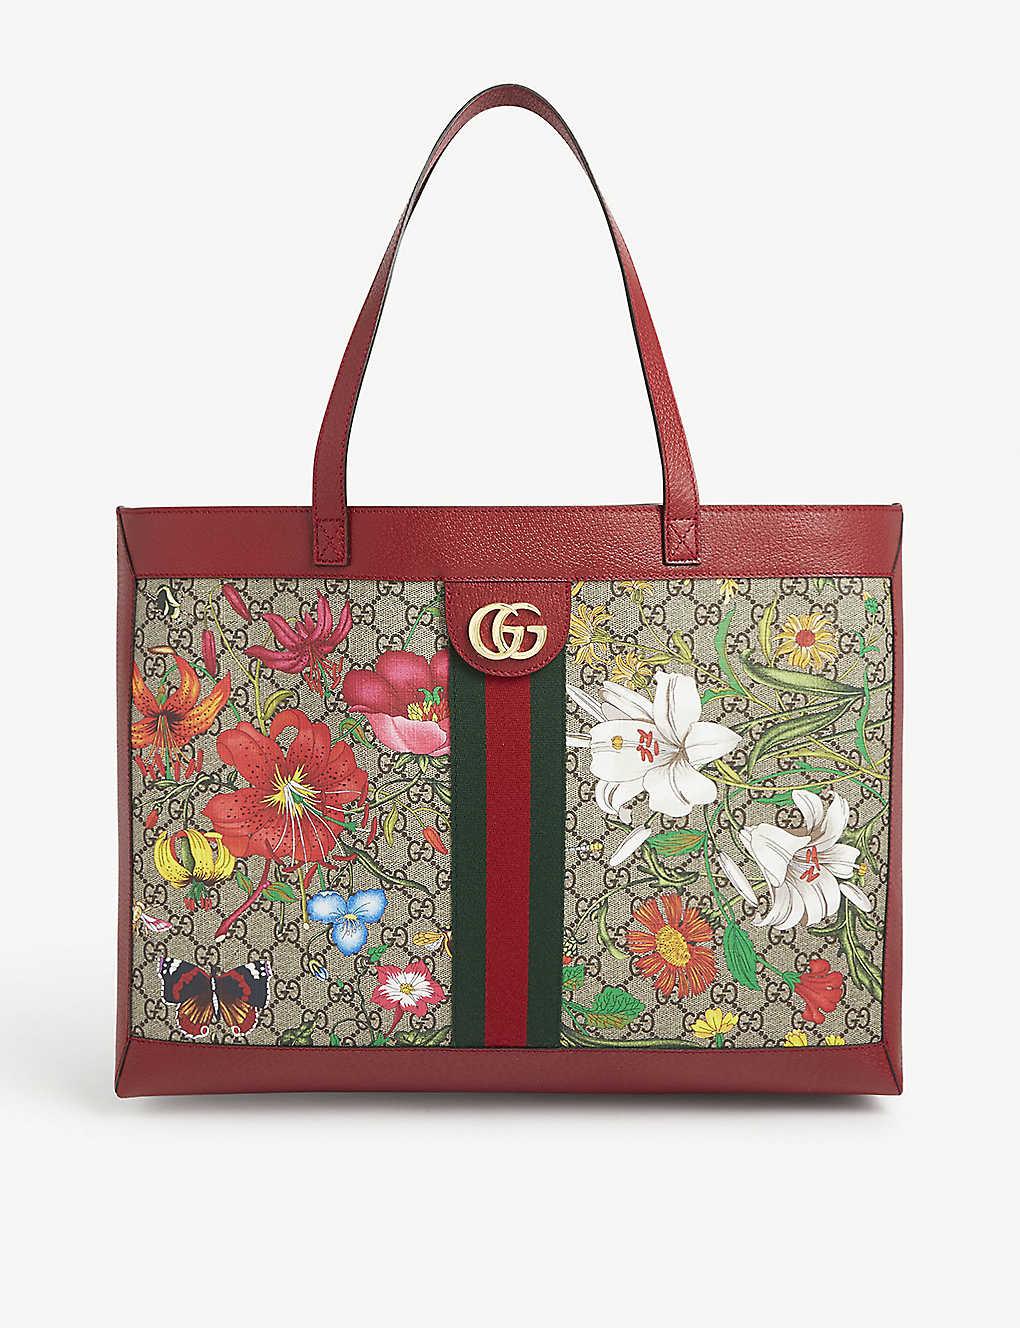 Gucci, Bags, Authentic Gucci Floral Canvas Tote Bag